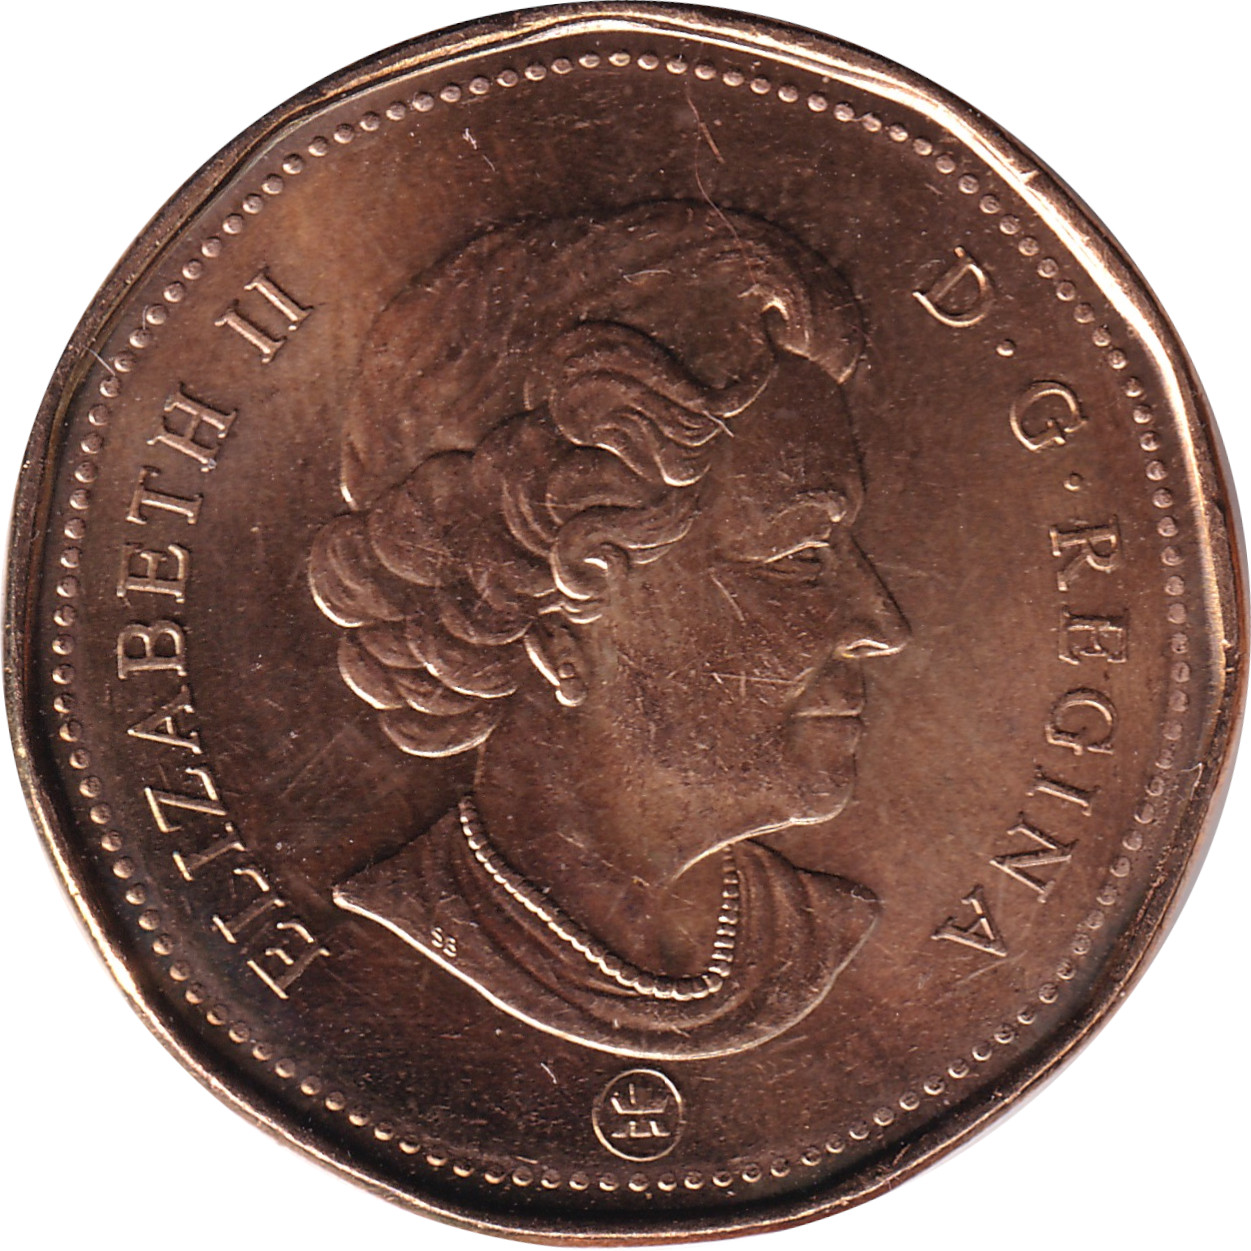 1 dollar - Elizabeth II - Tête agée - Non sécurisée